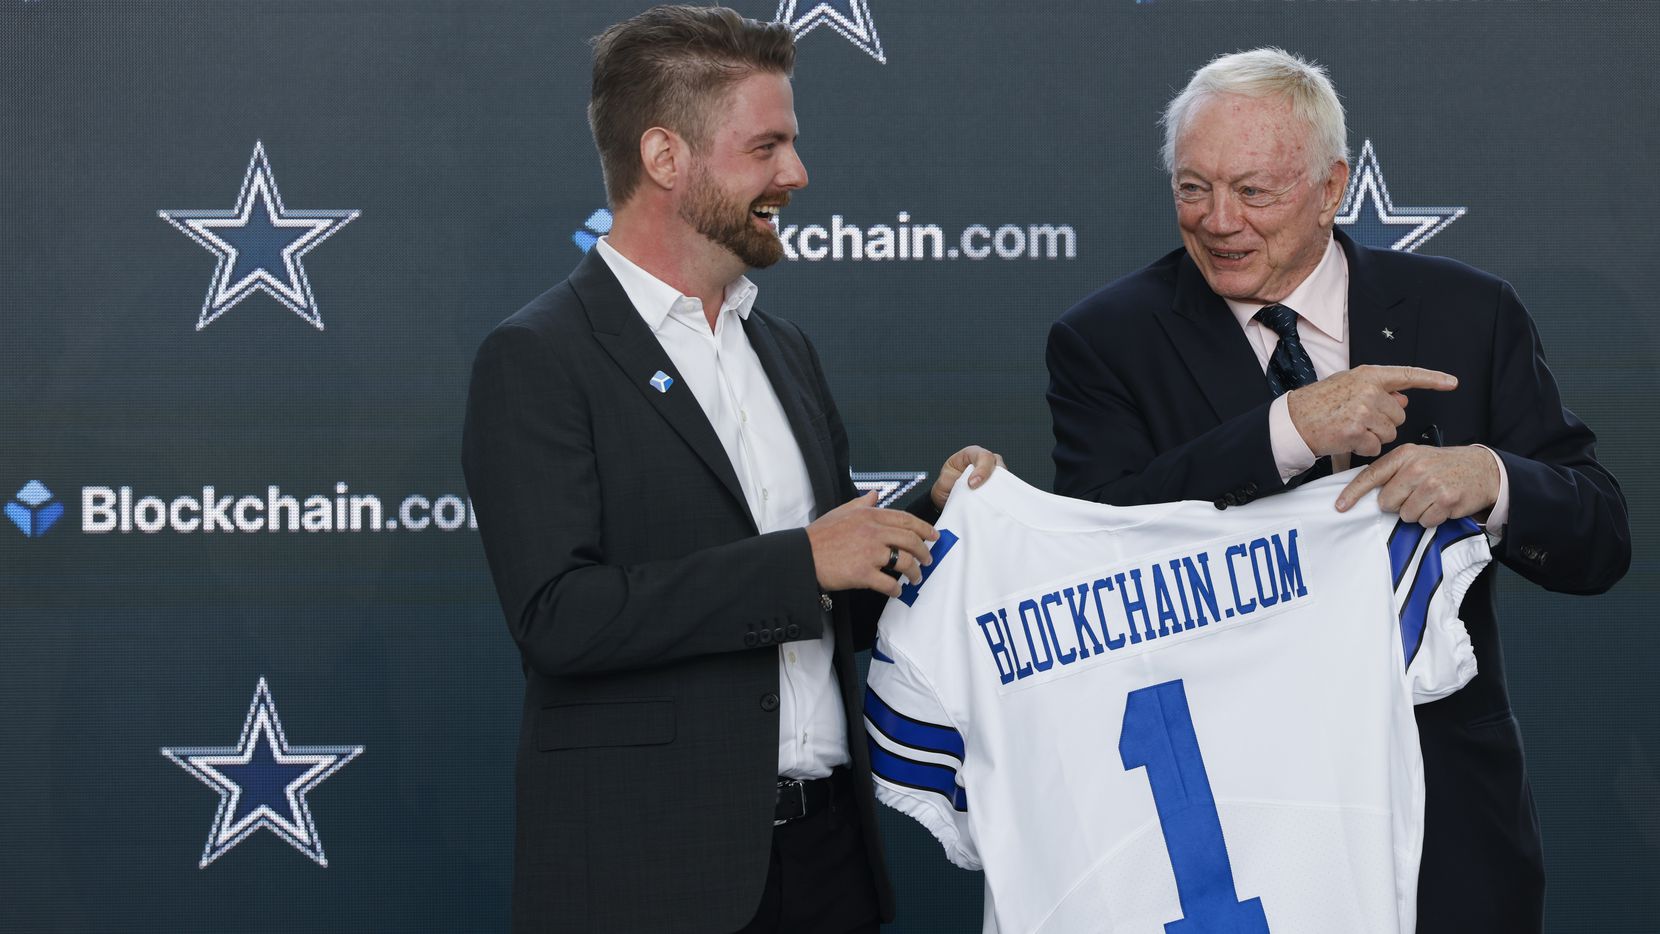 Dallas Cowboys Partners With Blockchain.com